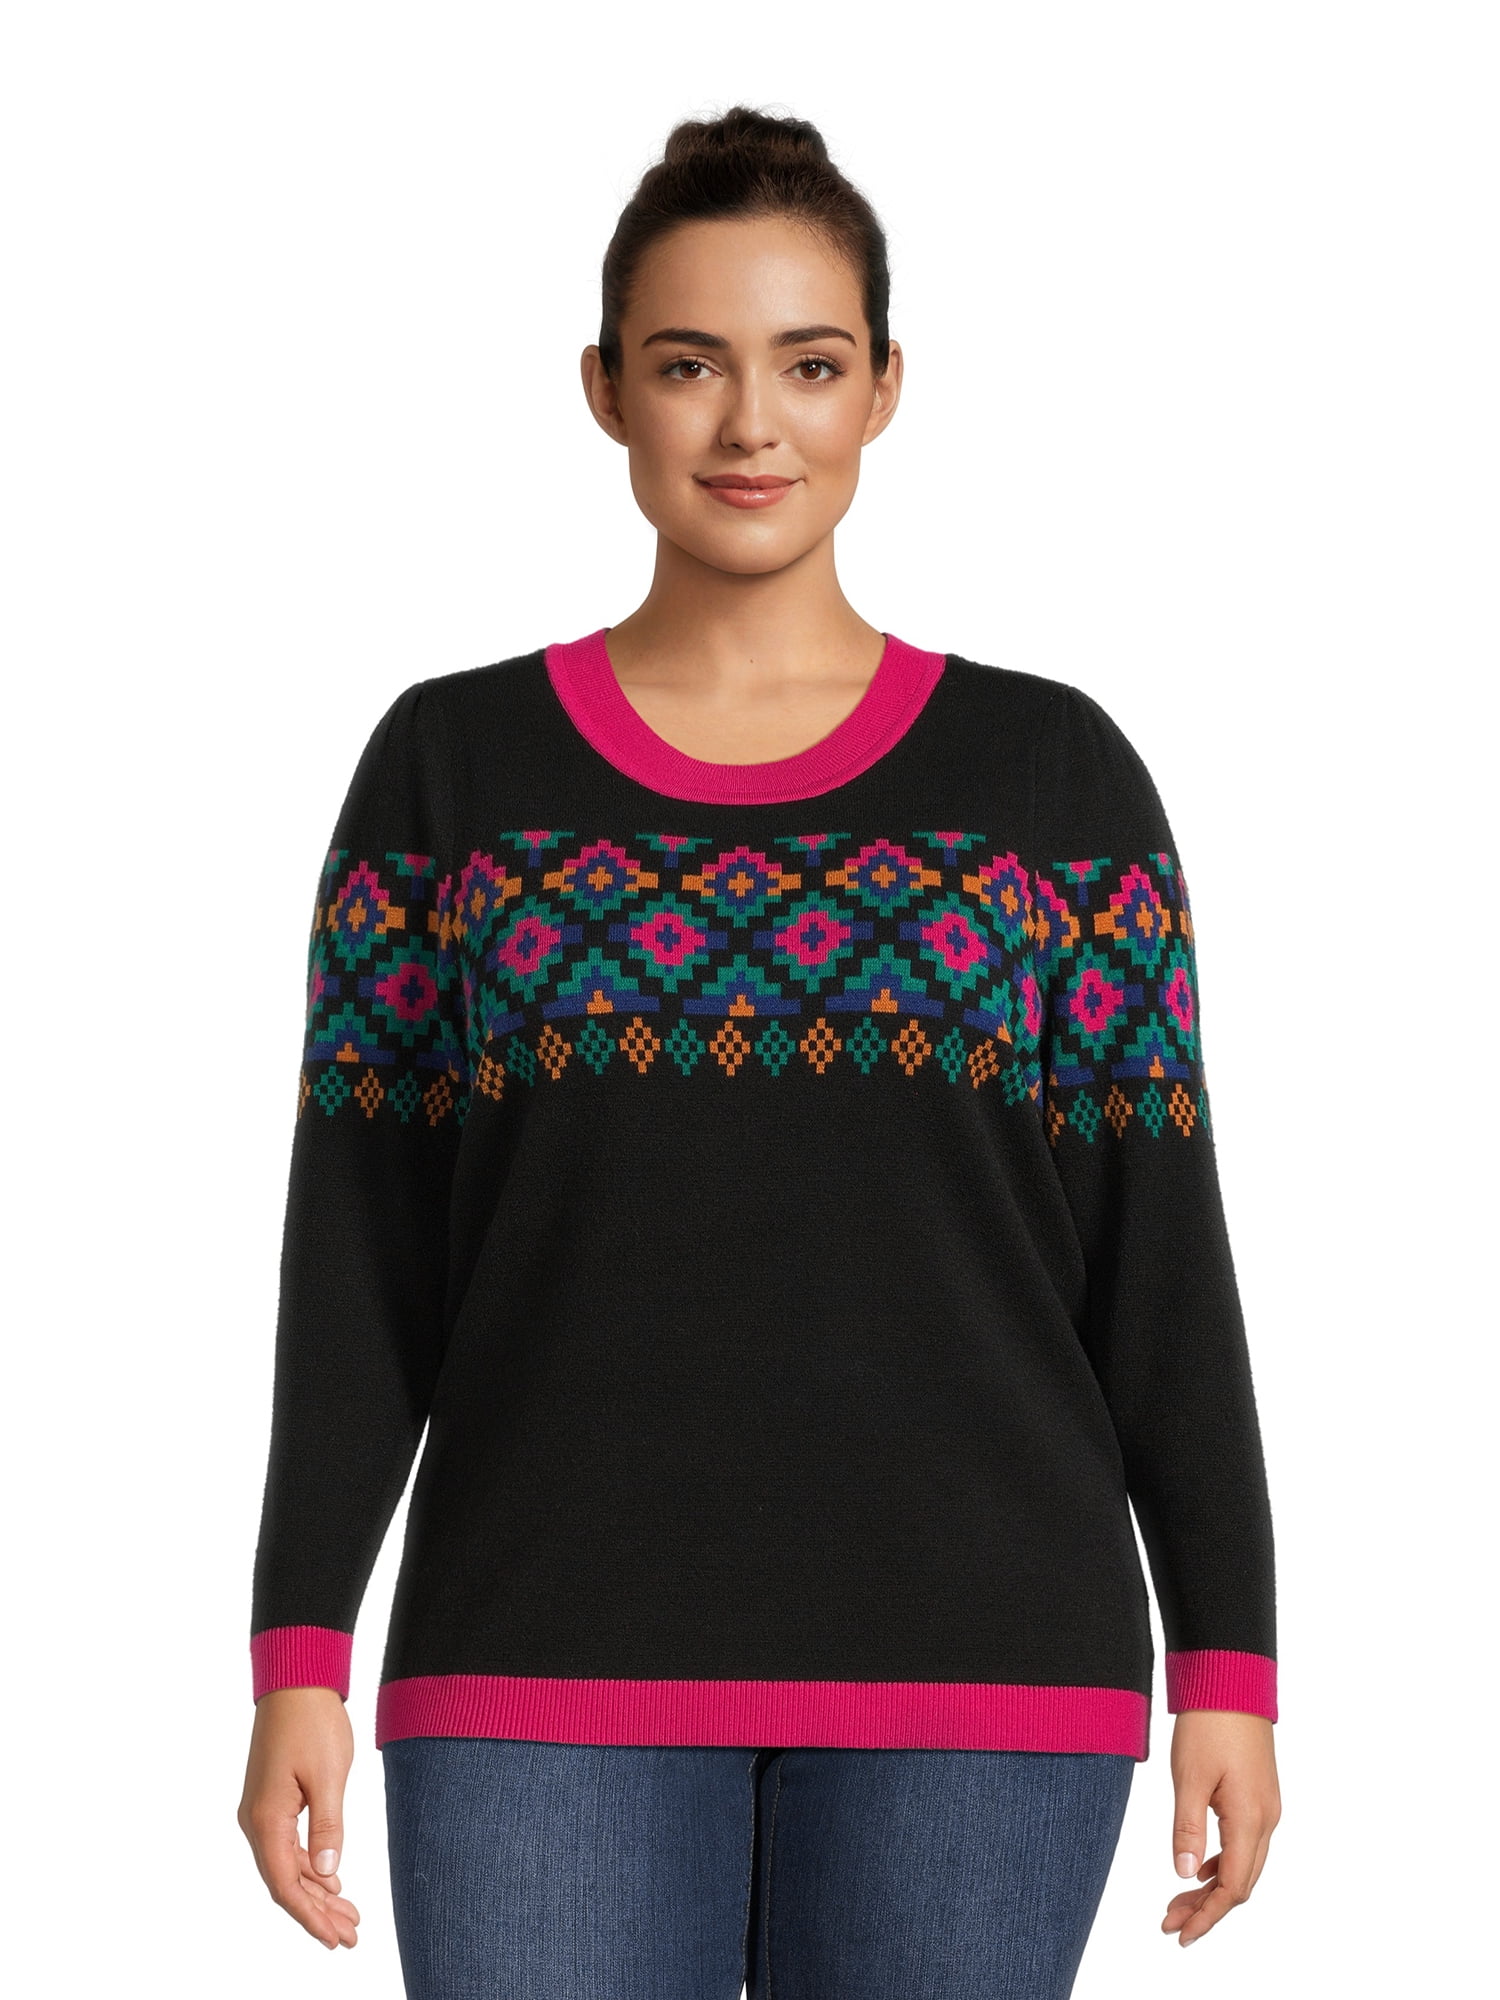 Terra & Sky Women's Plus Size Jacquard Sweater, Midweight - Walmart.com